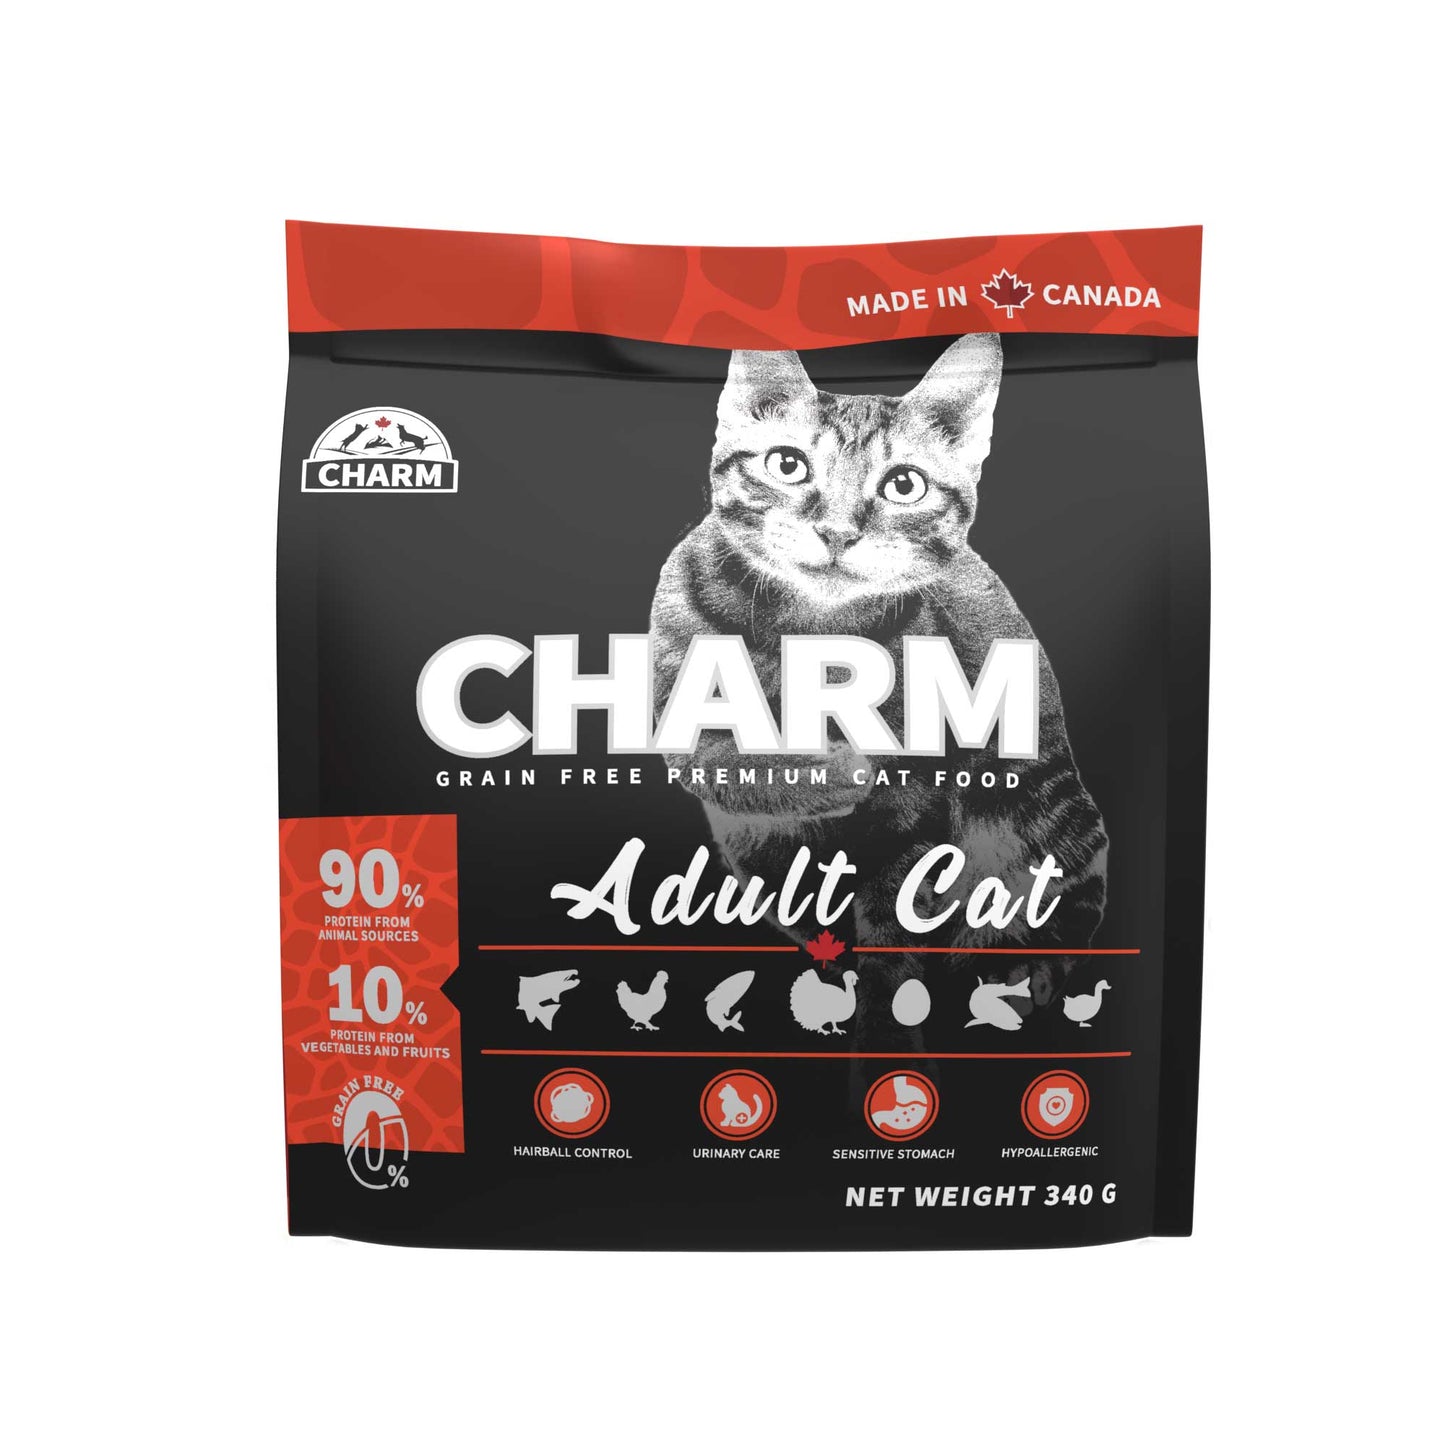 CHARM adult cat 成猫用